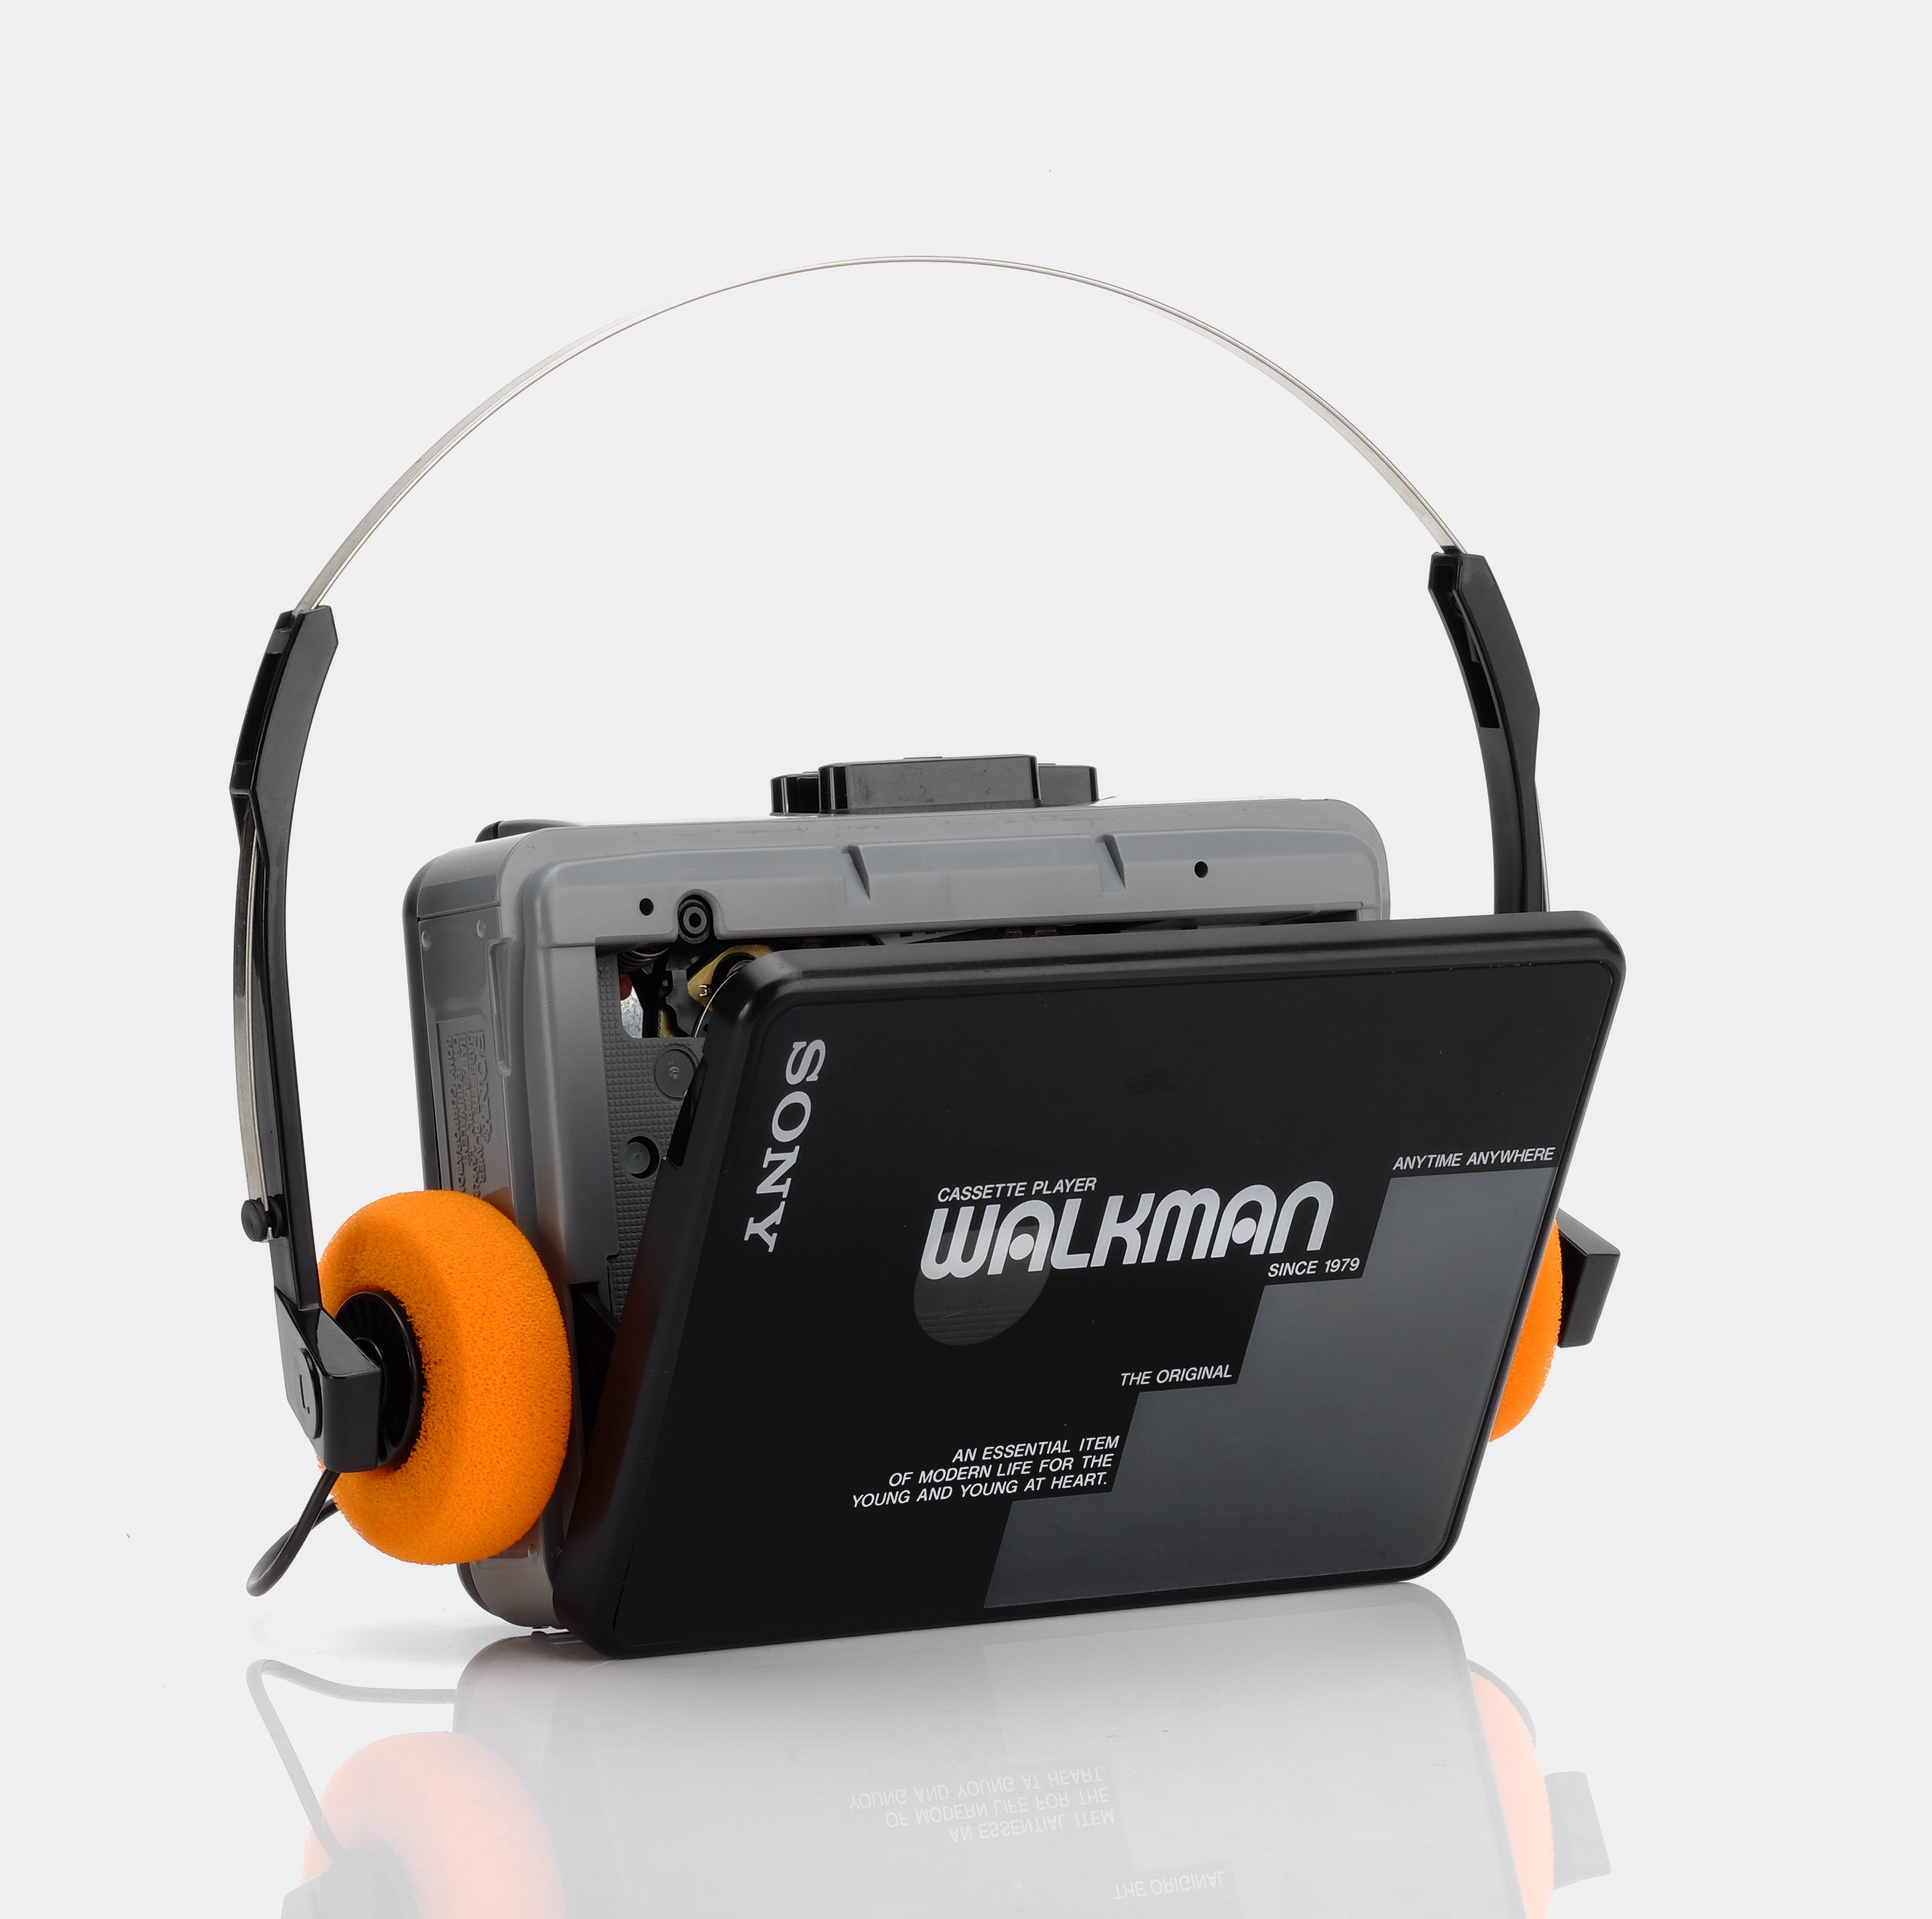 Sony Walkman WM-A10/B10/A18/B18 "Step Edition" Portable Cassette Player